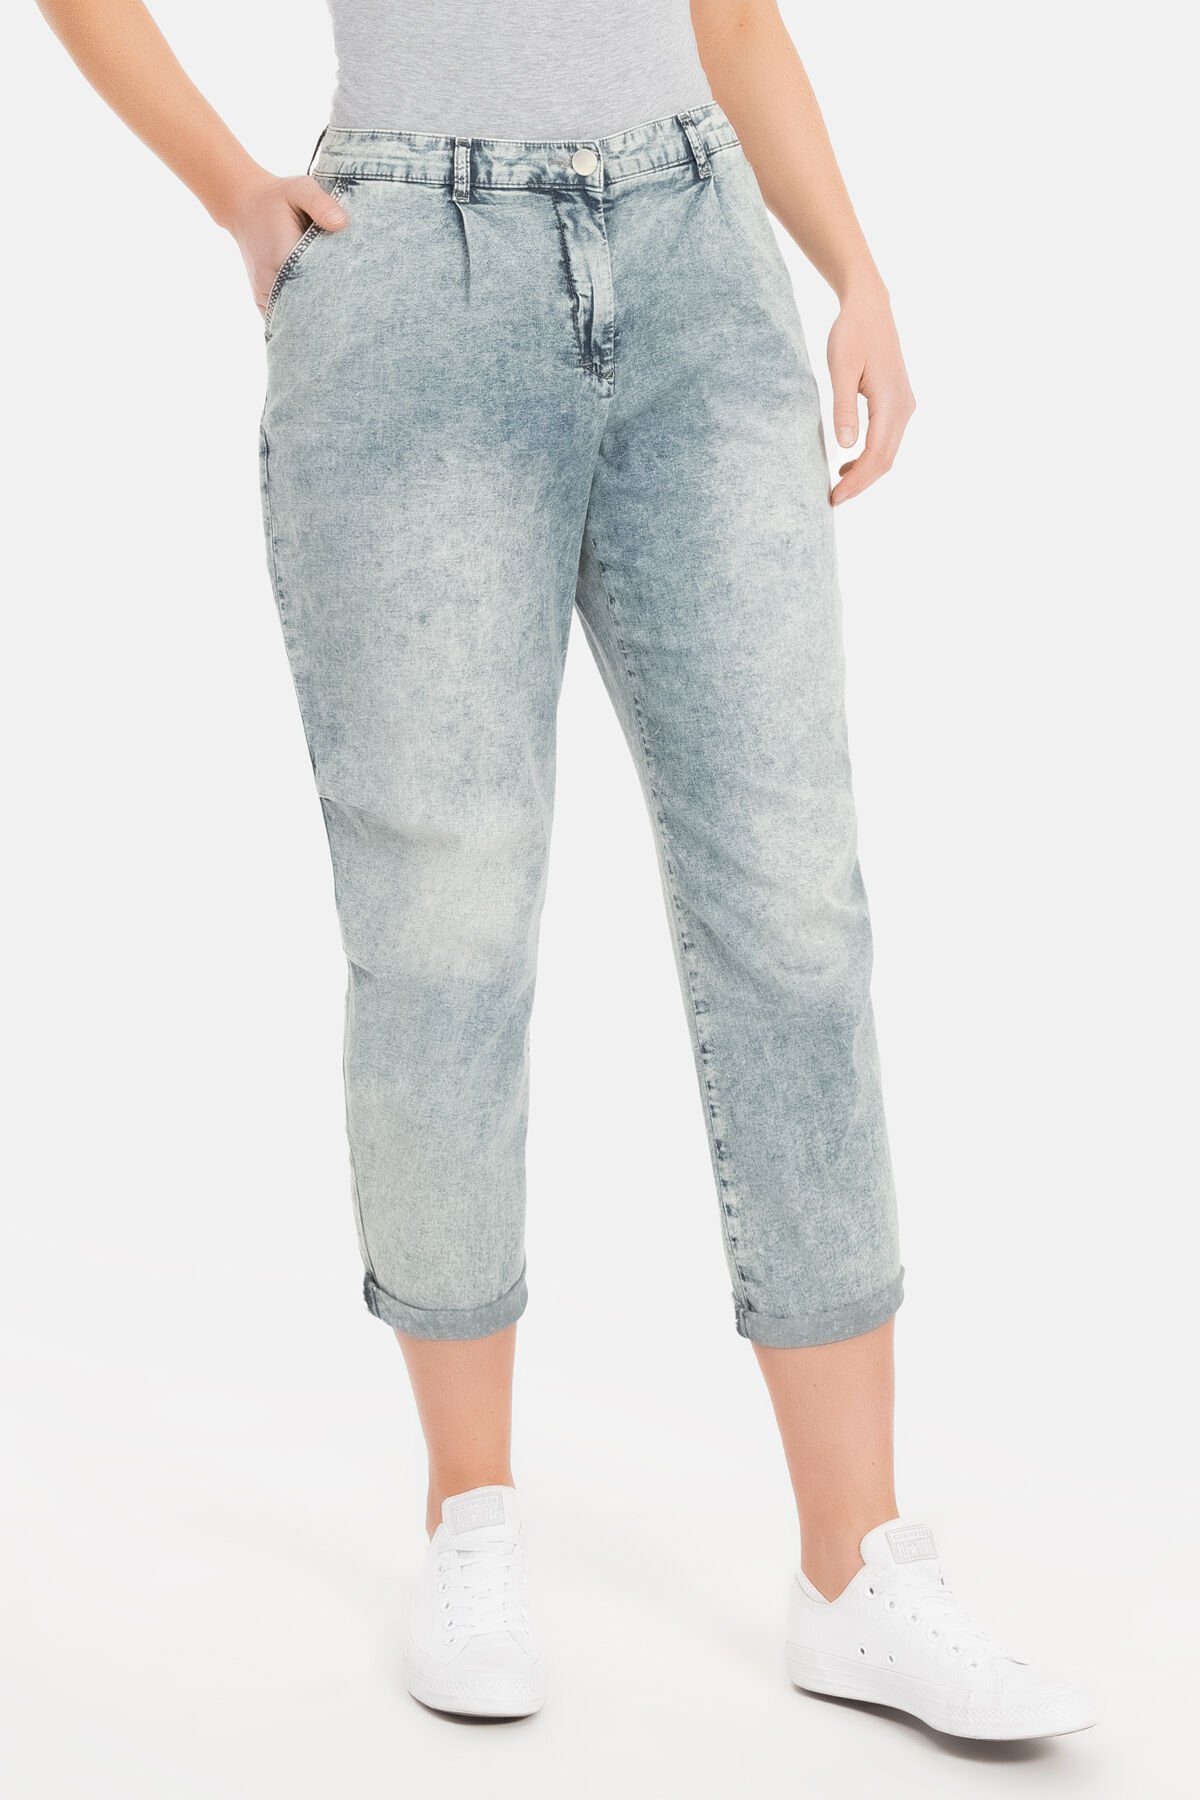 Recover Pants Relax-fit-Jeans Bonny mit aufwendiger Effektwaschung SKY BLEACHED